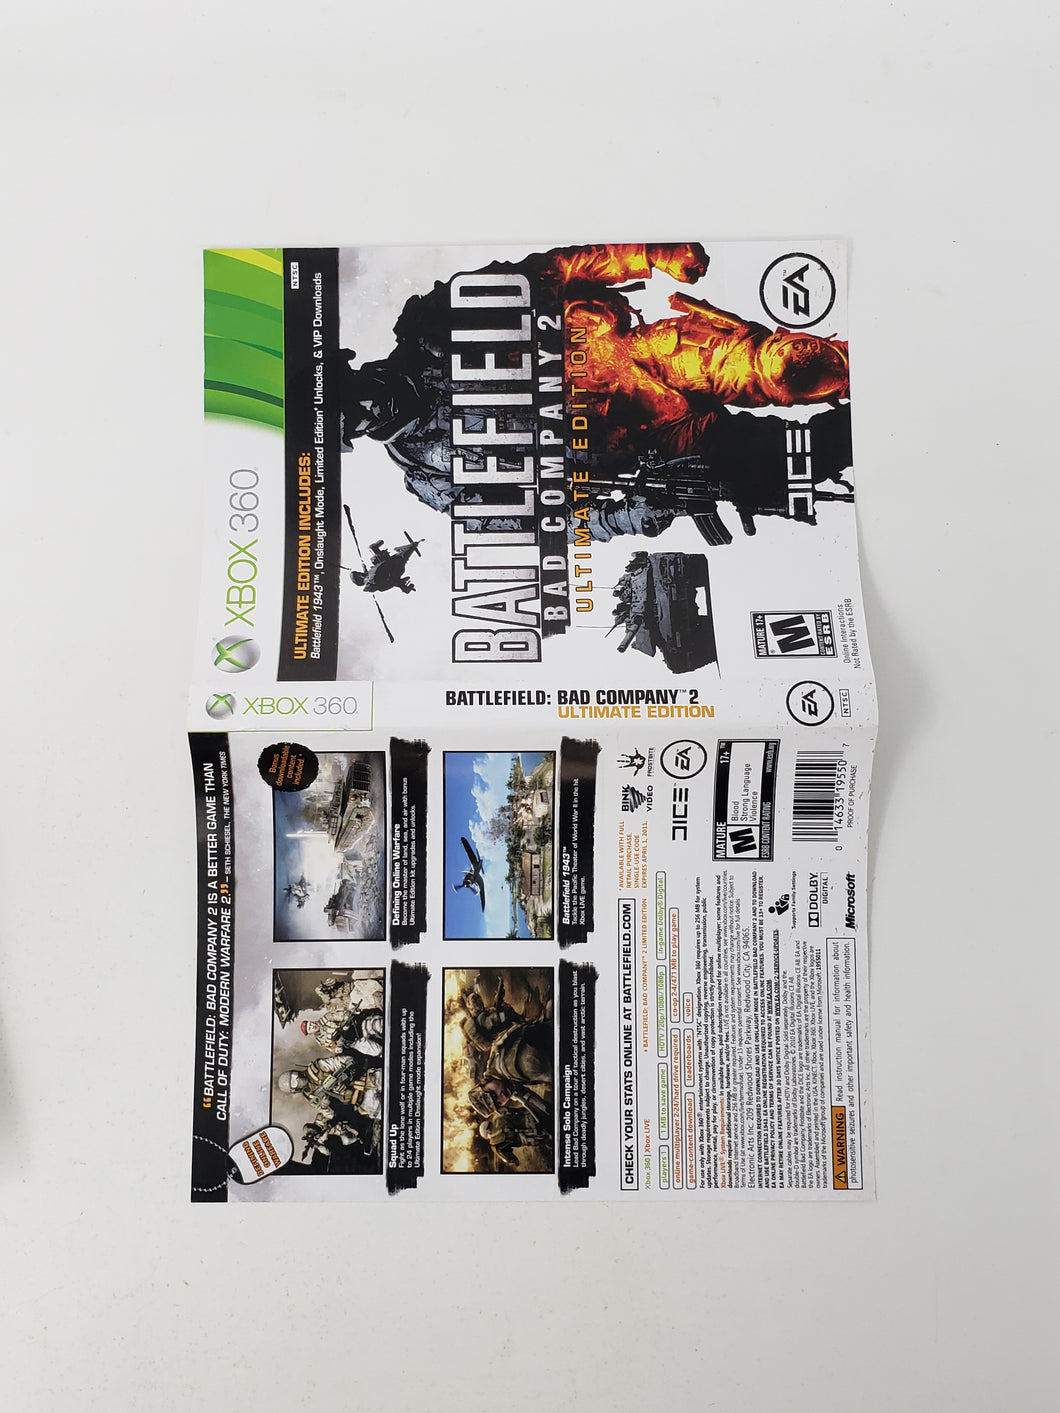 Battlefield - Bad Company 2 Ultimate Edition [Cover art] - Microsoft XBOX360